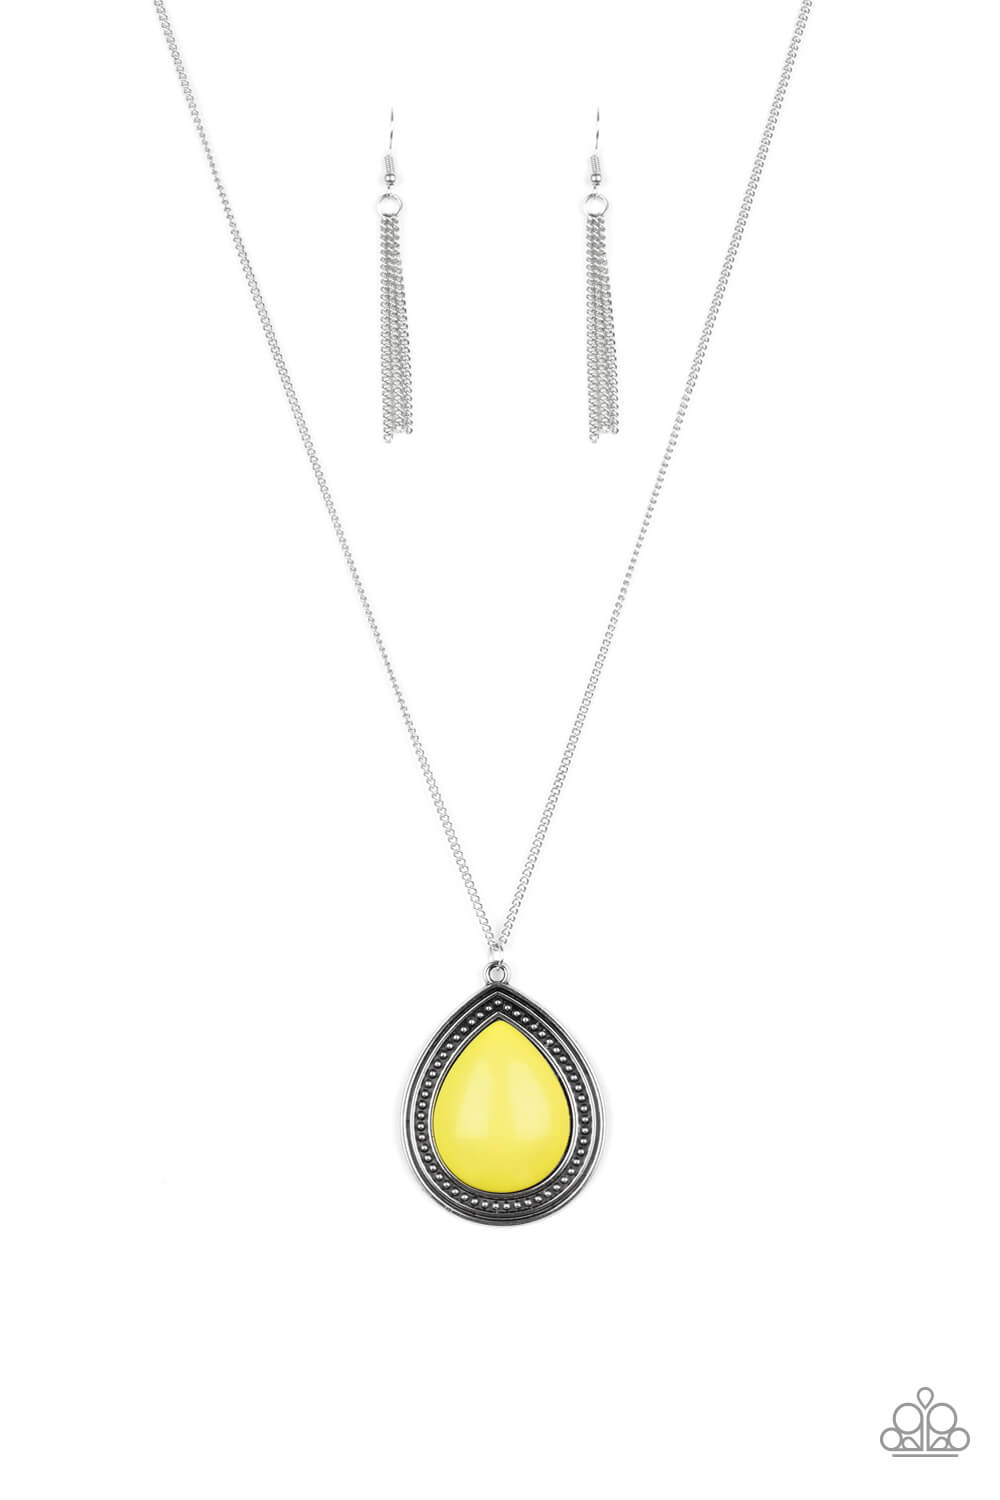 Chroma Courageous - Yellow Necklace Set - Princess Glam Shop